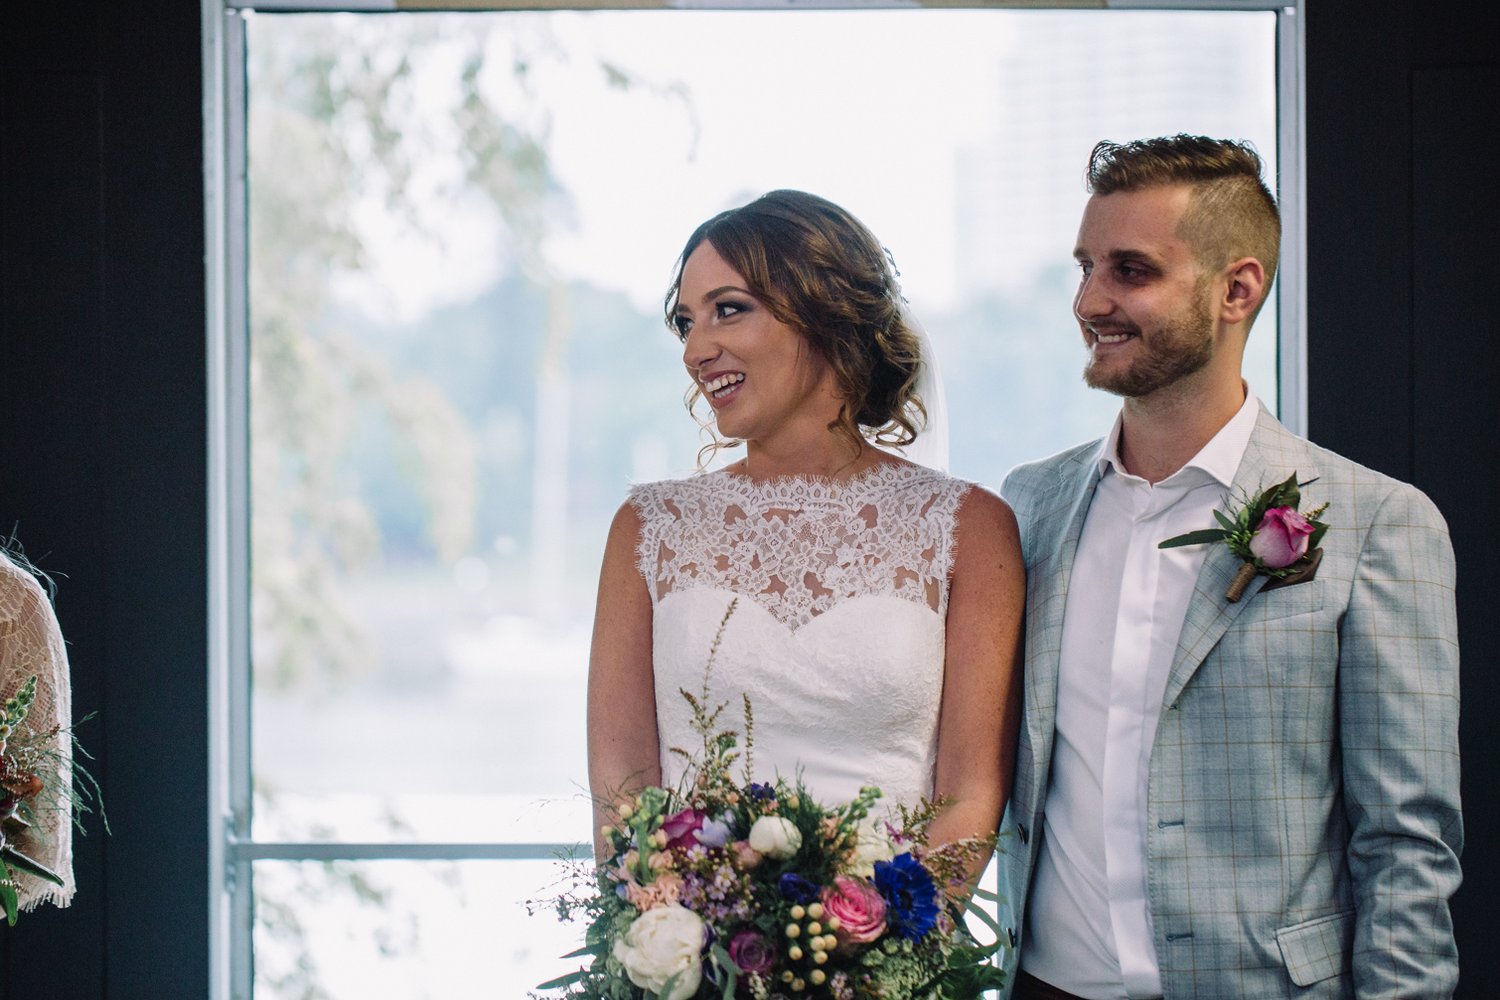 Capturing Love: Brisbane’s Premier Wedding Videographer